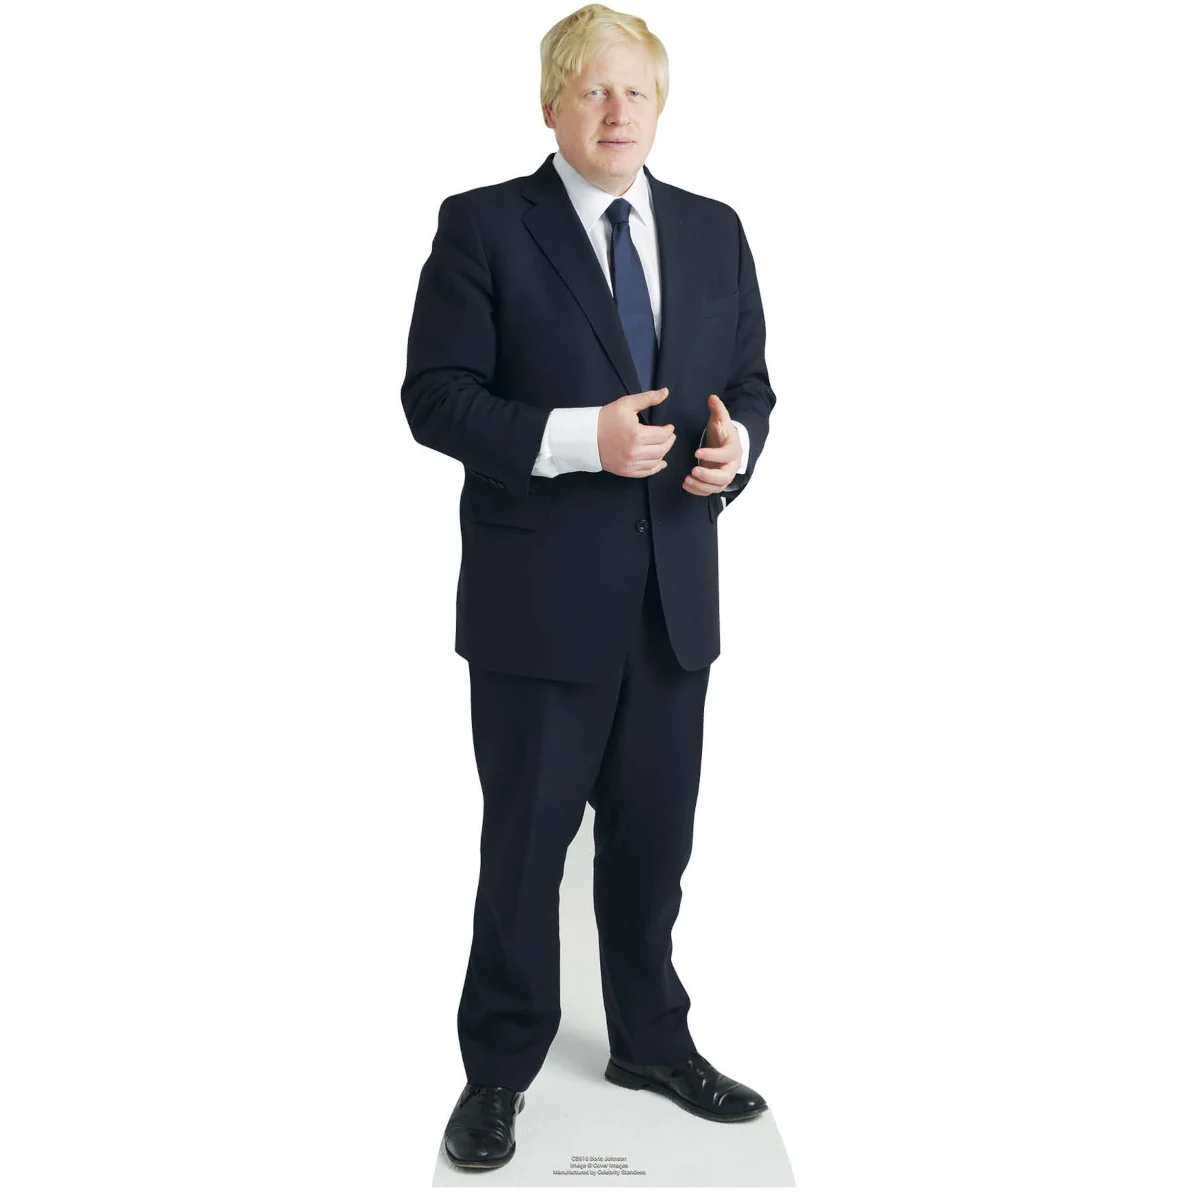 CS916 Boris Johnson (British Politician) Mini Cardboard Cutout Standee Front